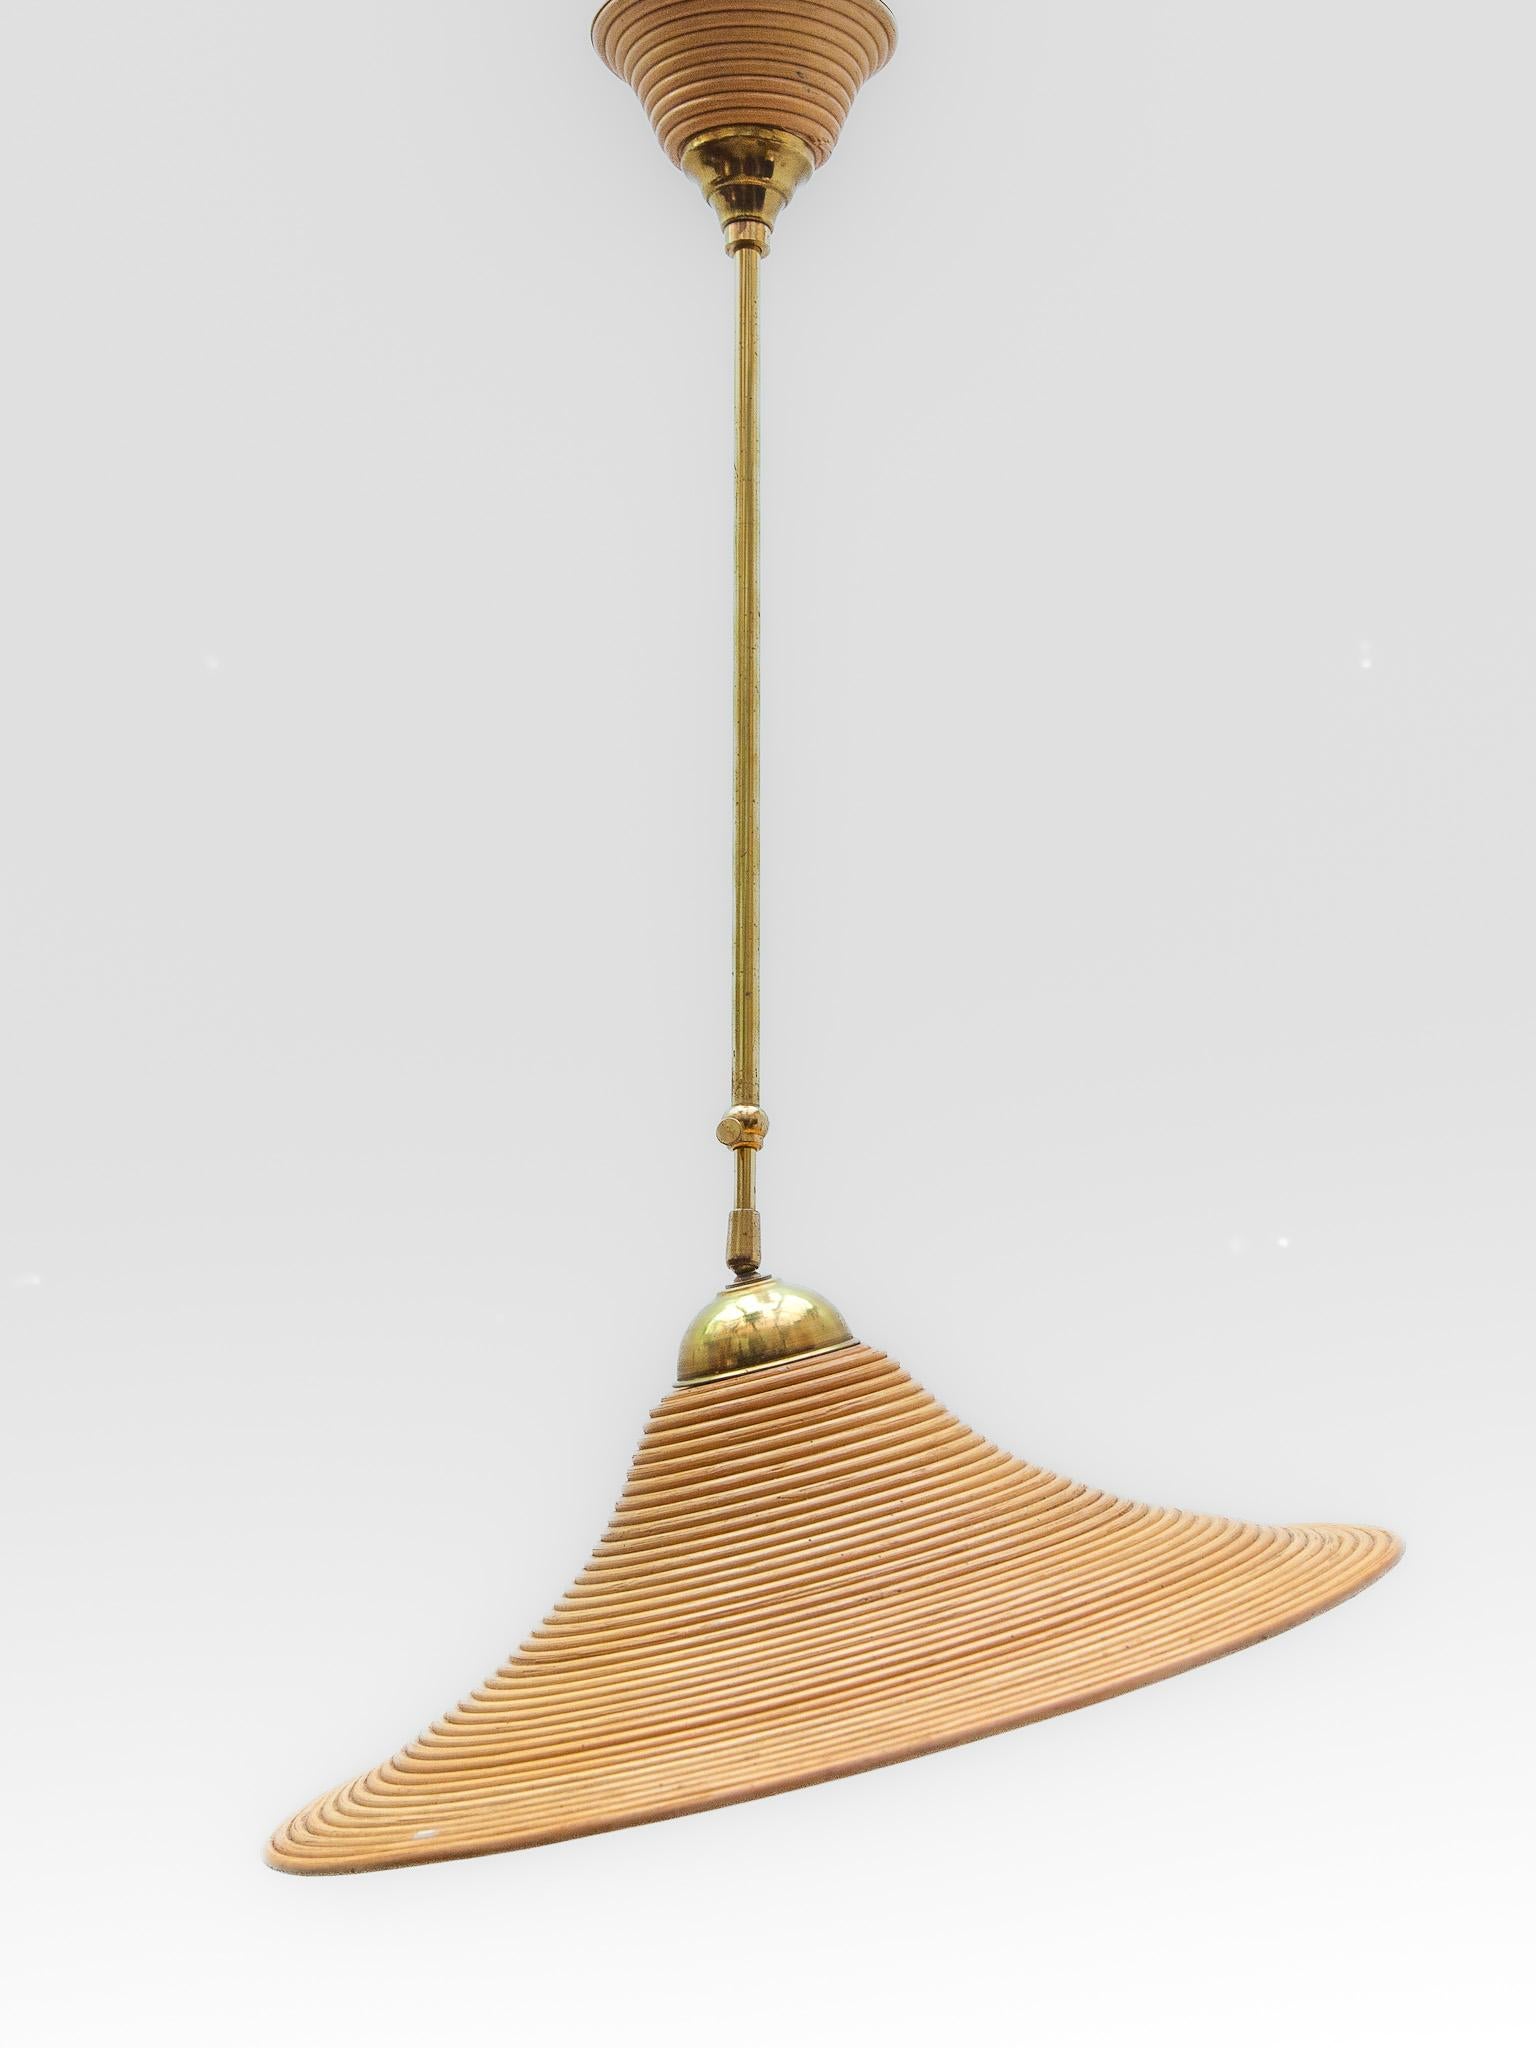 Italian Gabriella Crespi Style Adjustable Rattan Pendant Hanging Light, Italy, 1970s